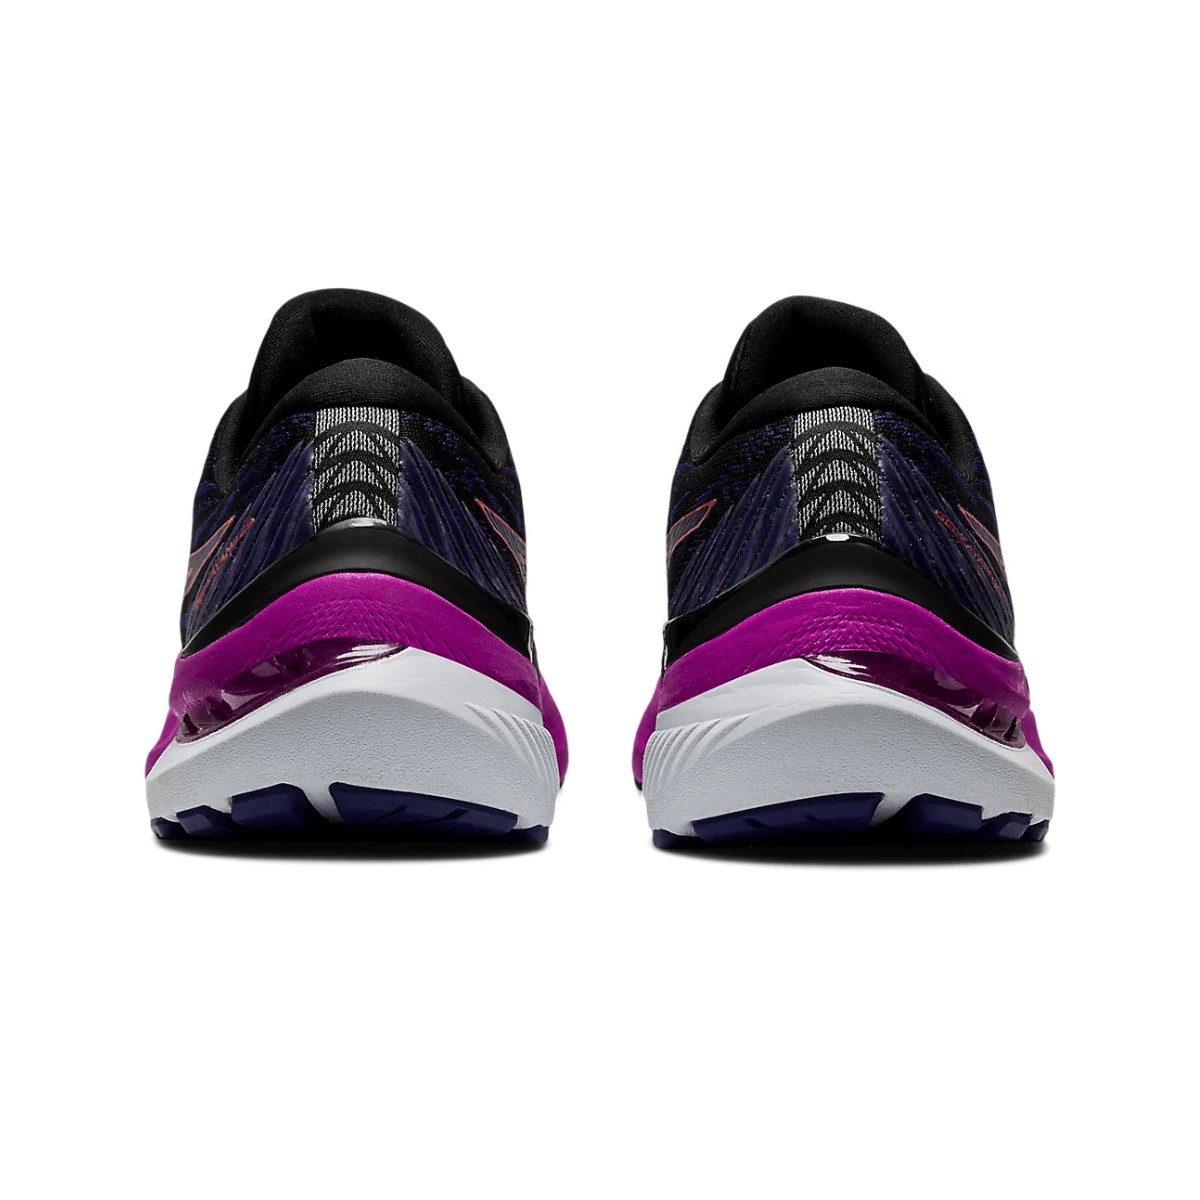 Asics Gel Kayano 29 Women's Running Shoes | Best price